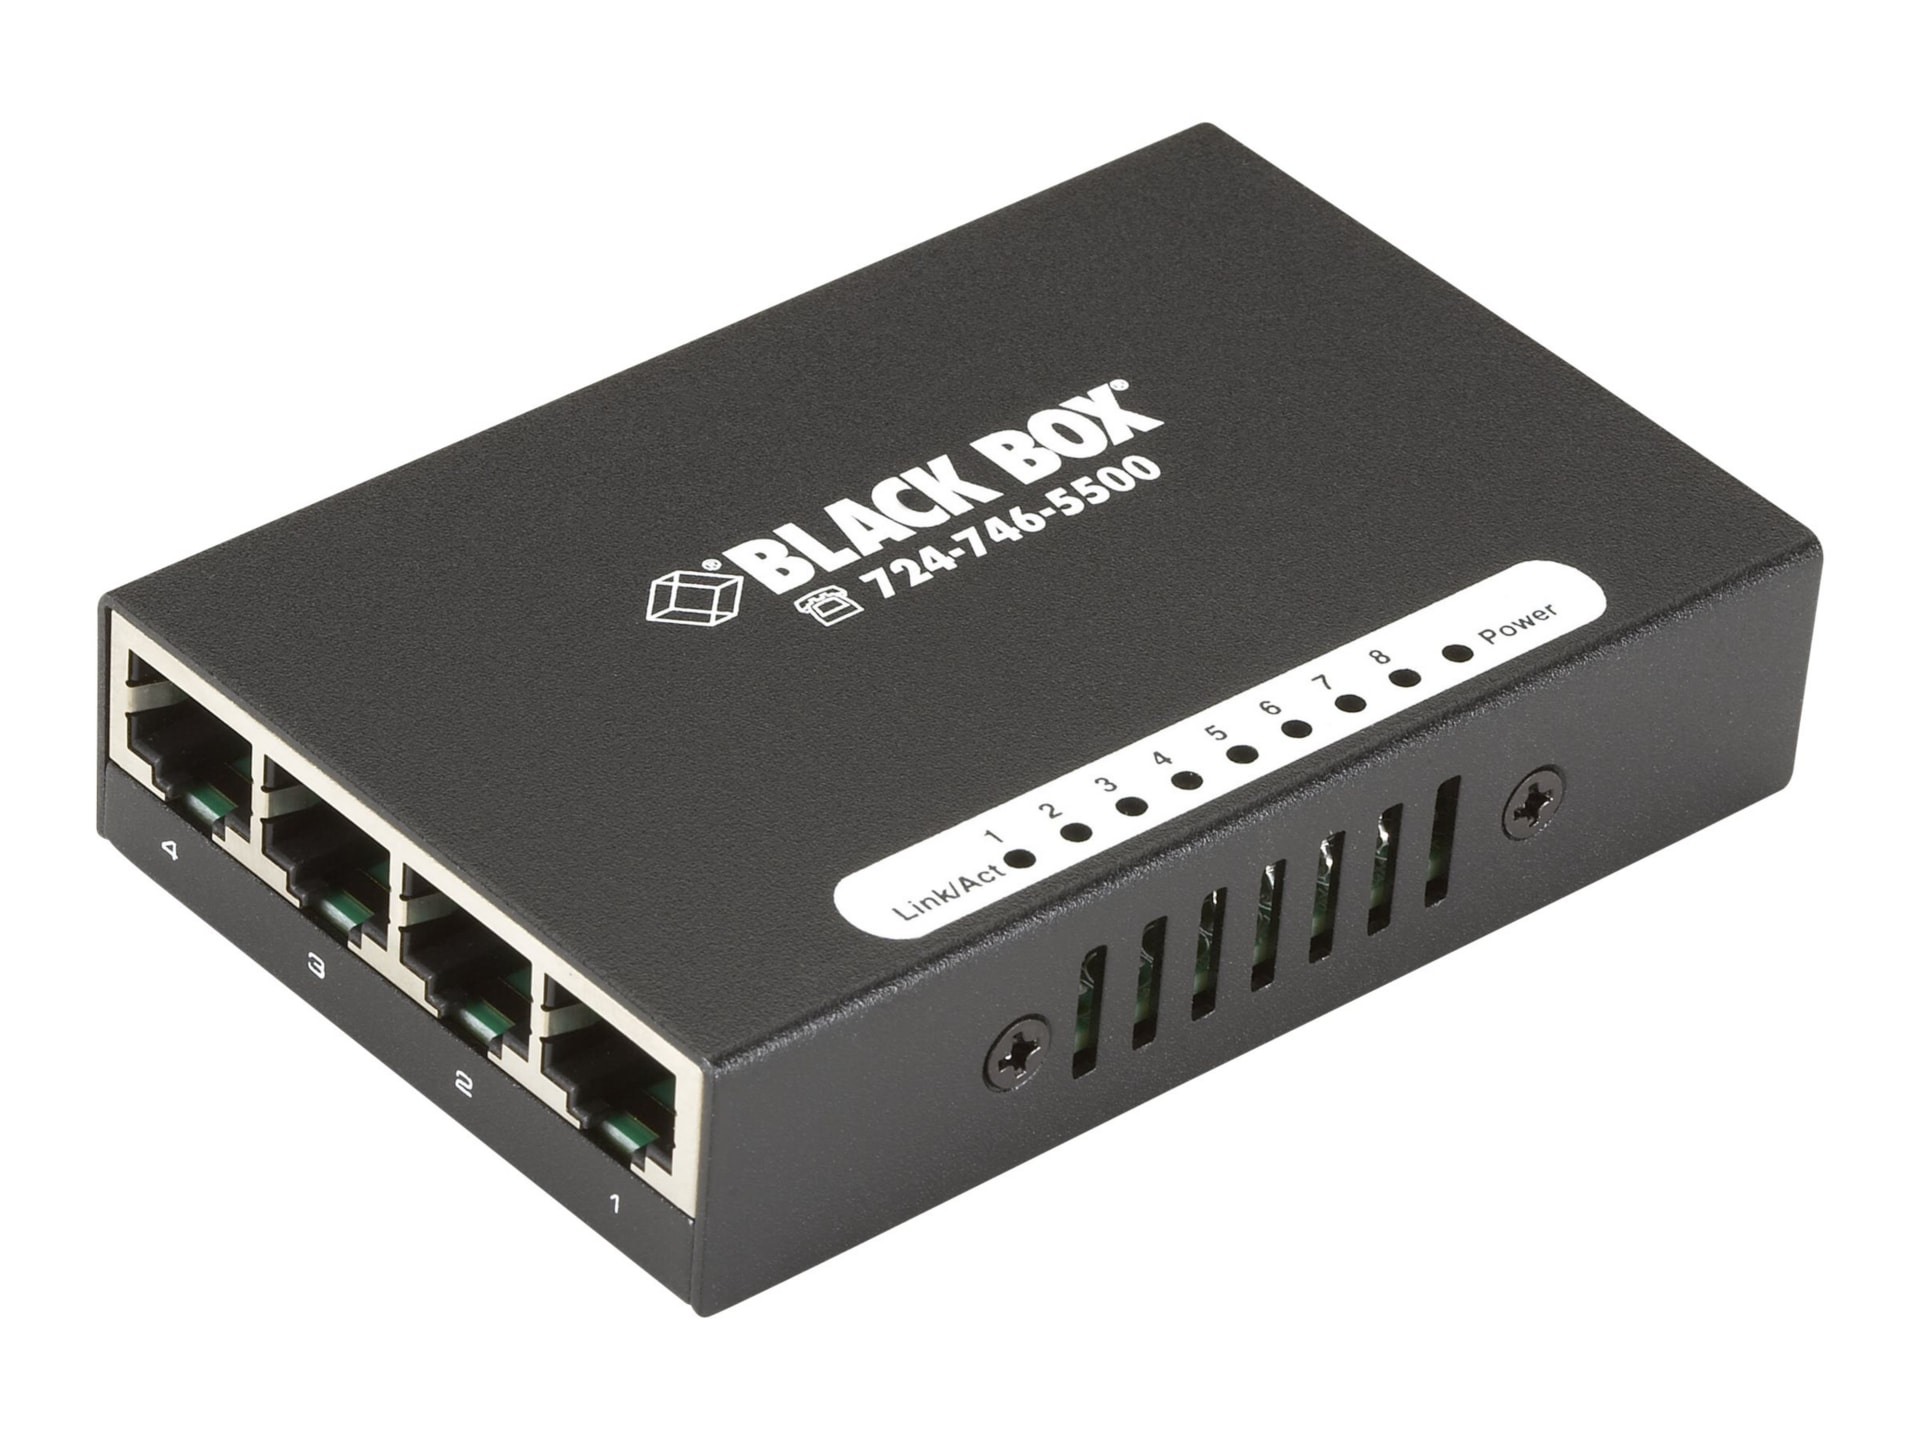 Black Box 8 Port 10/100 Autosensing Fast Ethernet Switch, AC or USB Powered